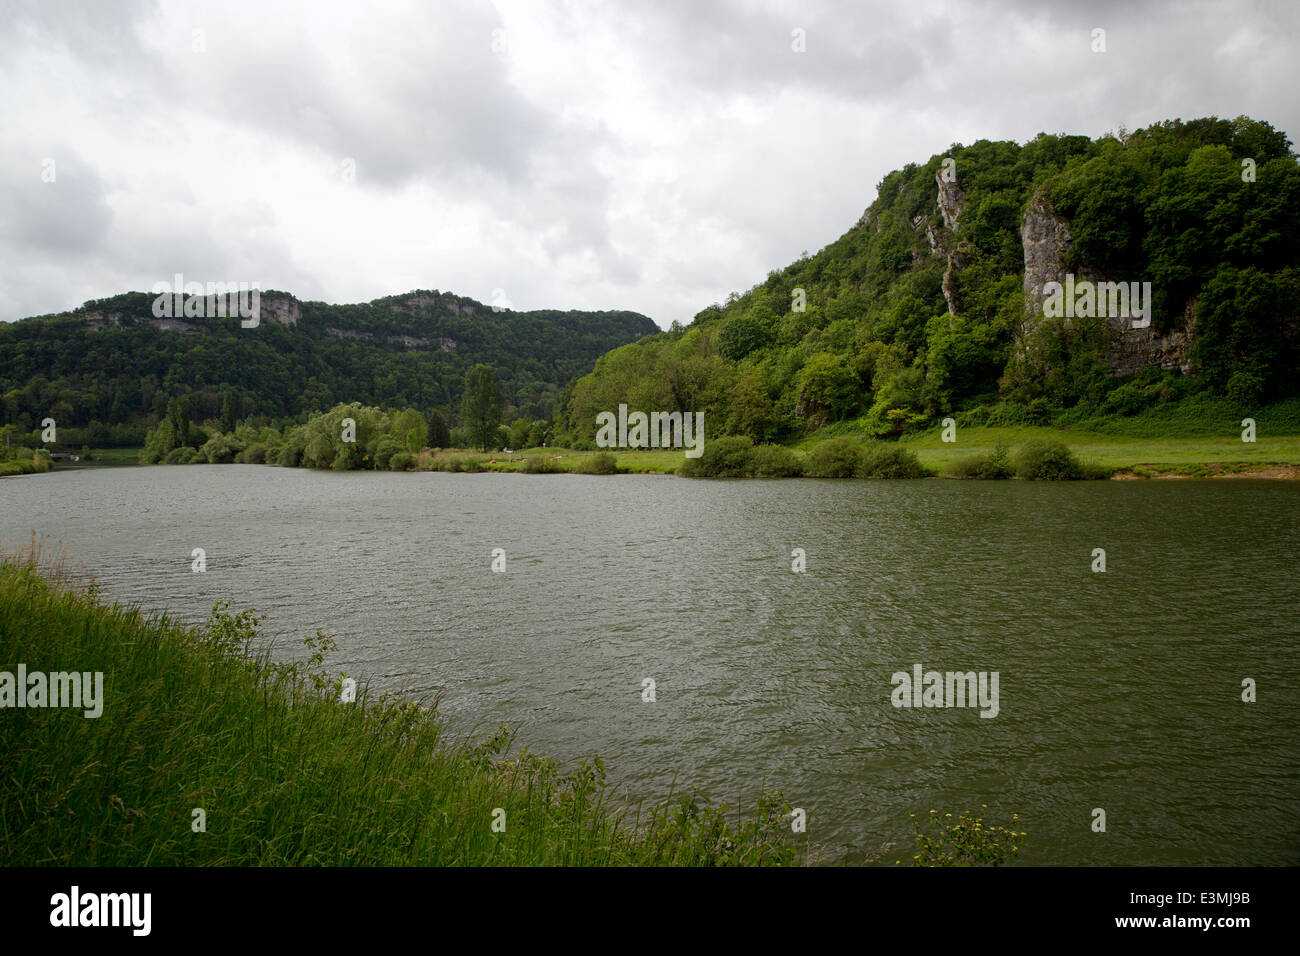 Typical landscape of French river Doubs, near Baume-les-Dames, Franche-Comté, Doubs, France Stock Photo